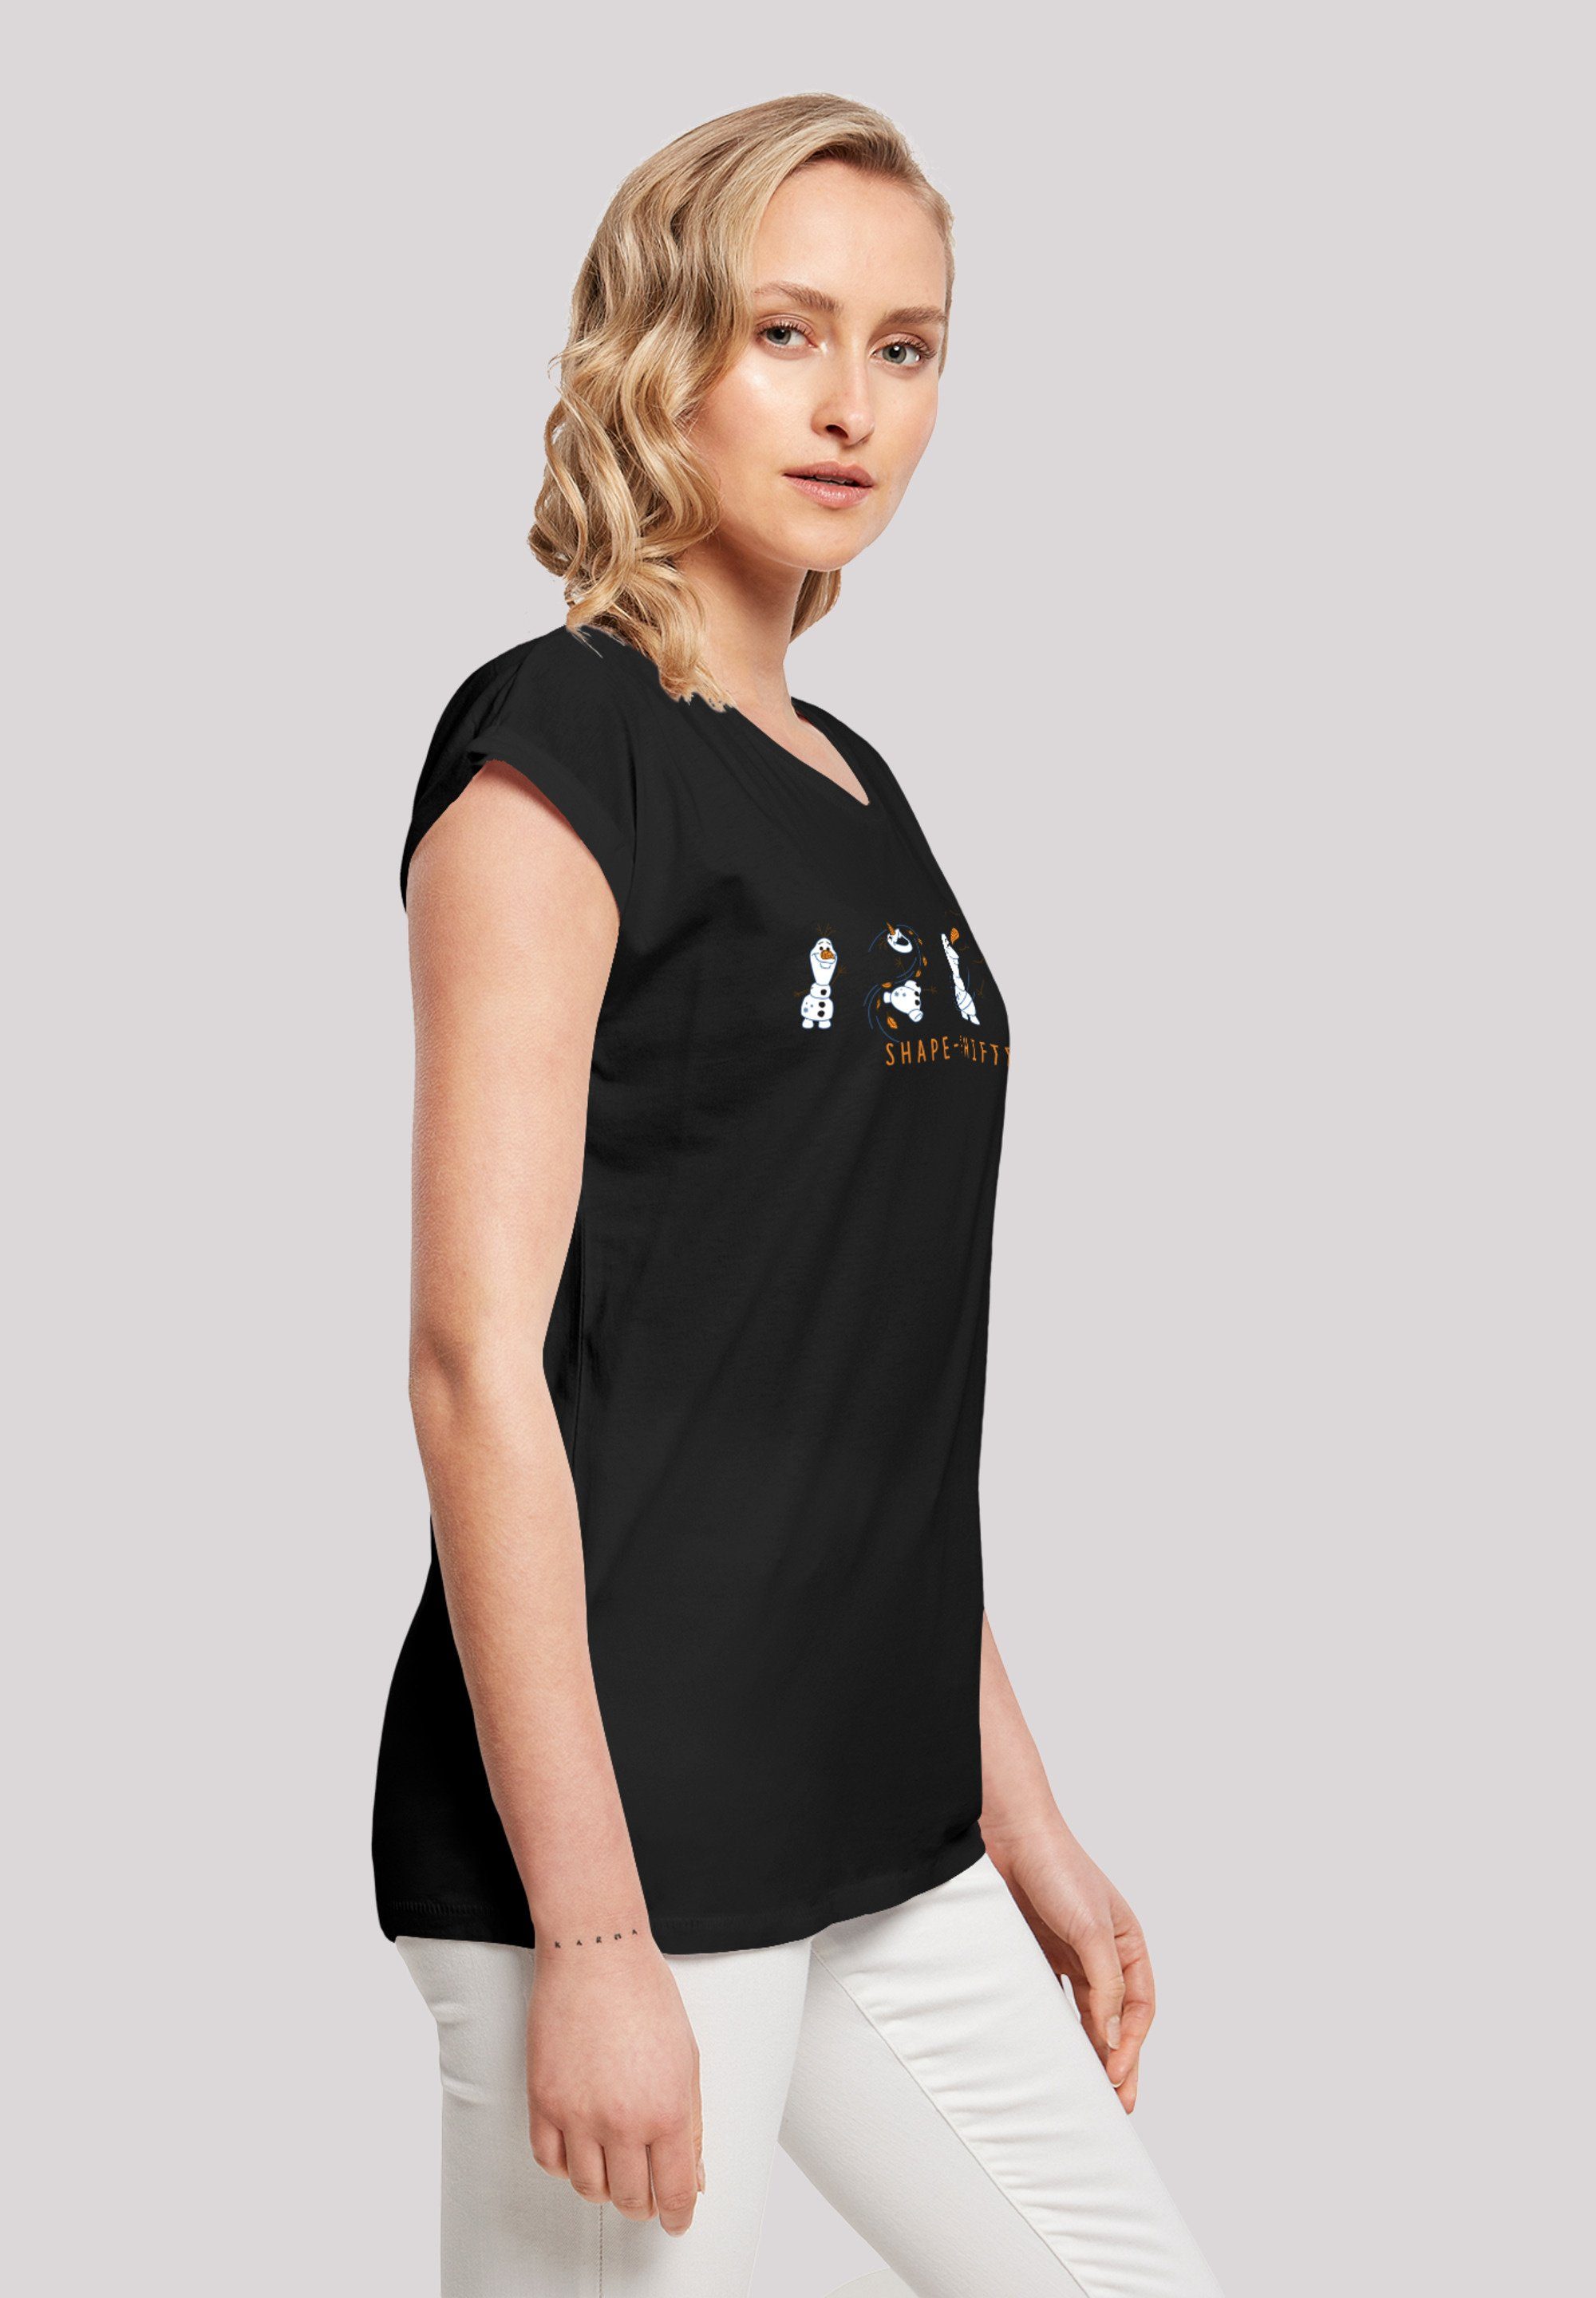 Olaf Frozen T-Shirt schwarz F4NT4STIC Disney 2 Shape-Shifter Print